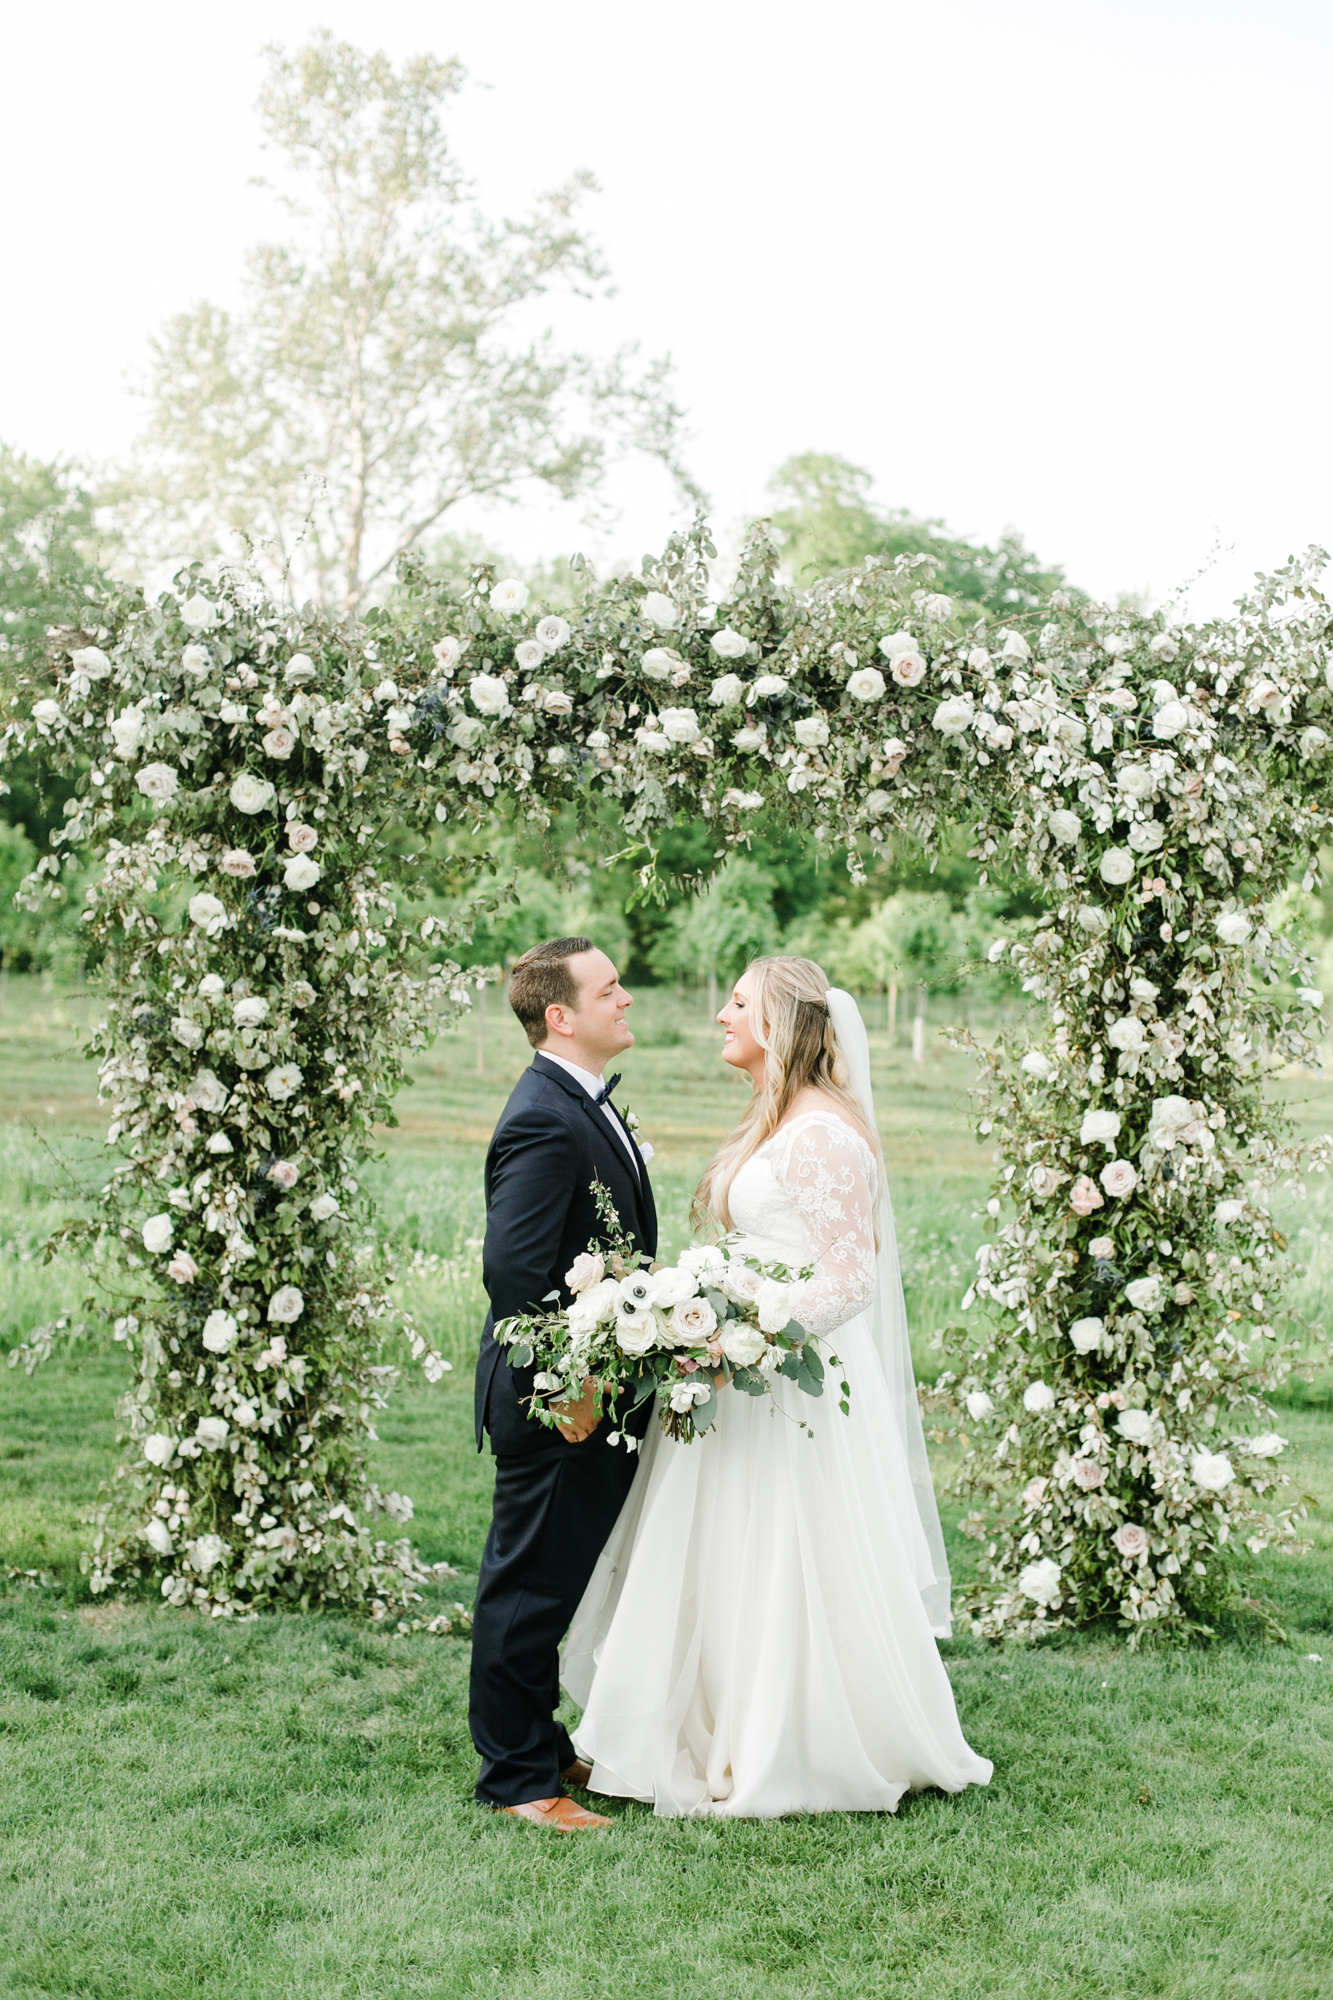 Natural, organic floral arch for the wedding ceremony backdrop // Nashville Wedding Floral Design